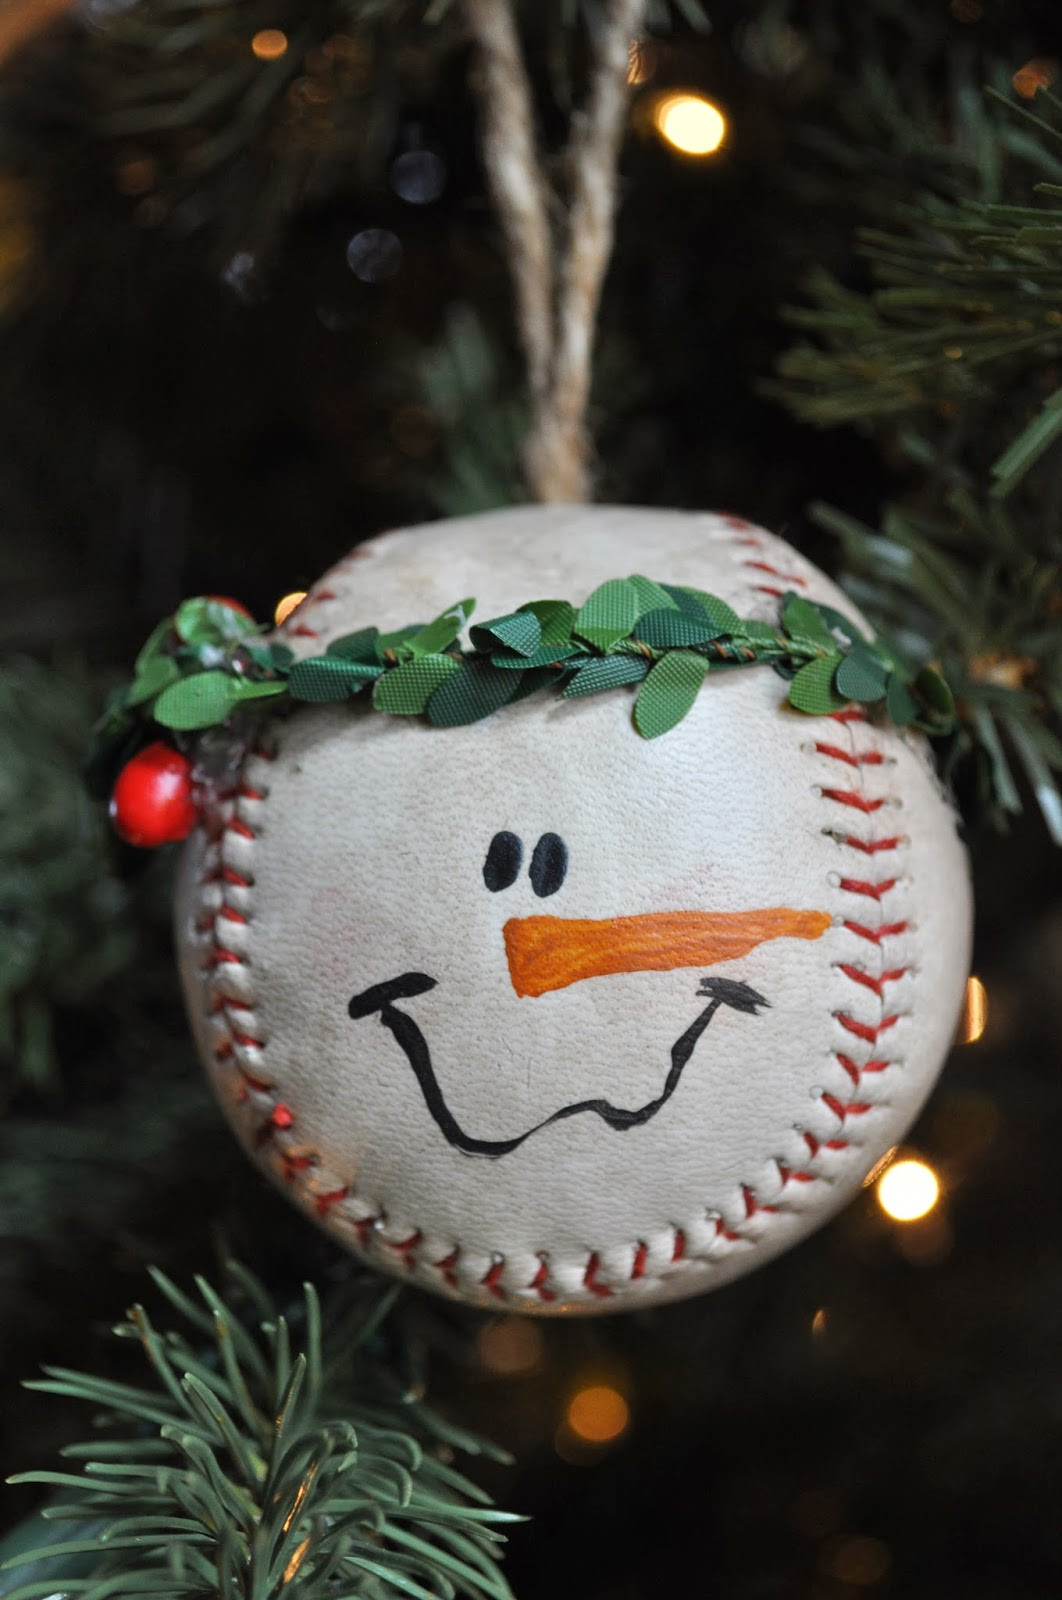 Best ideas about Snowman Ornaments DIY
. Save or Pin Grassy Branch Farm Baseball Snowman Ornament Now.